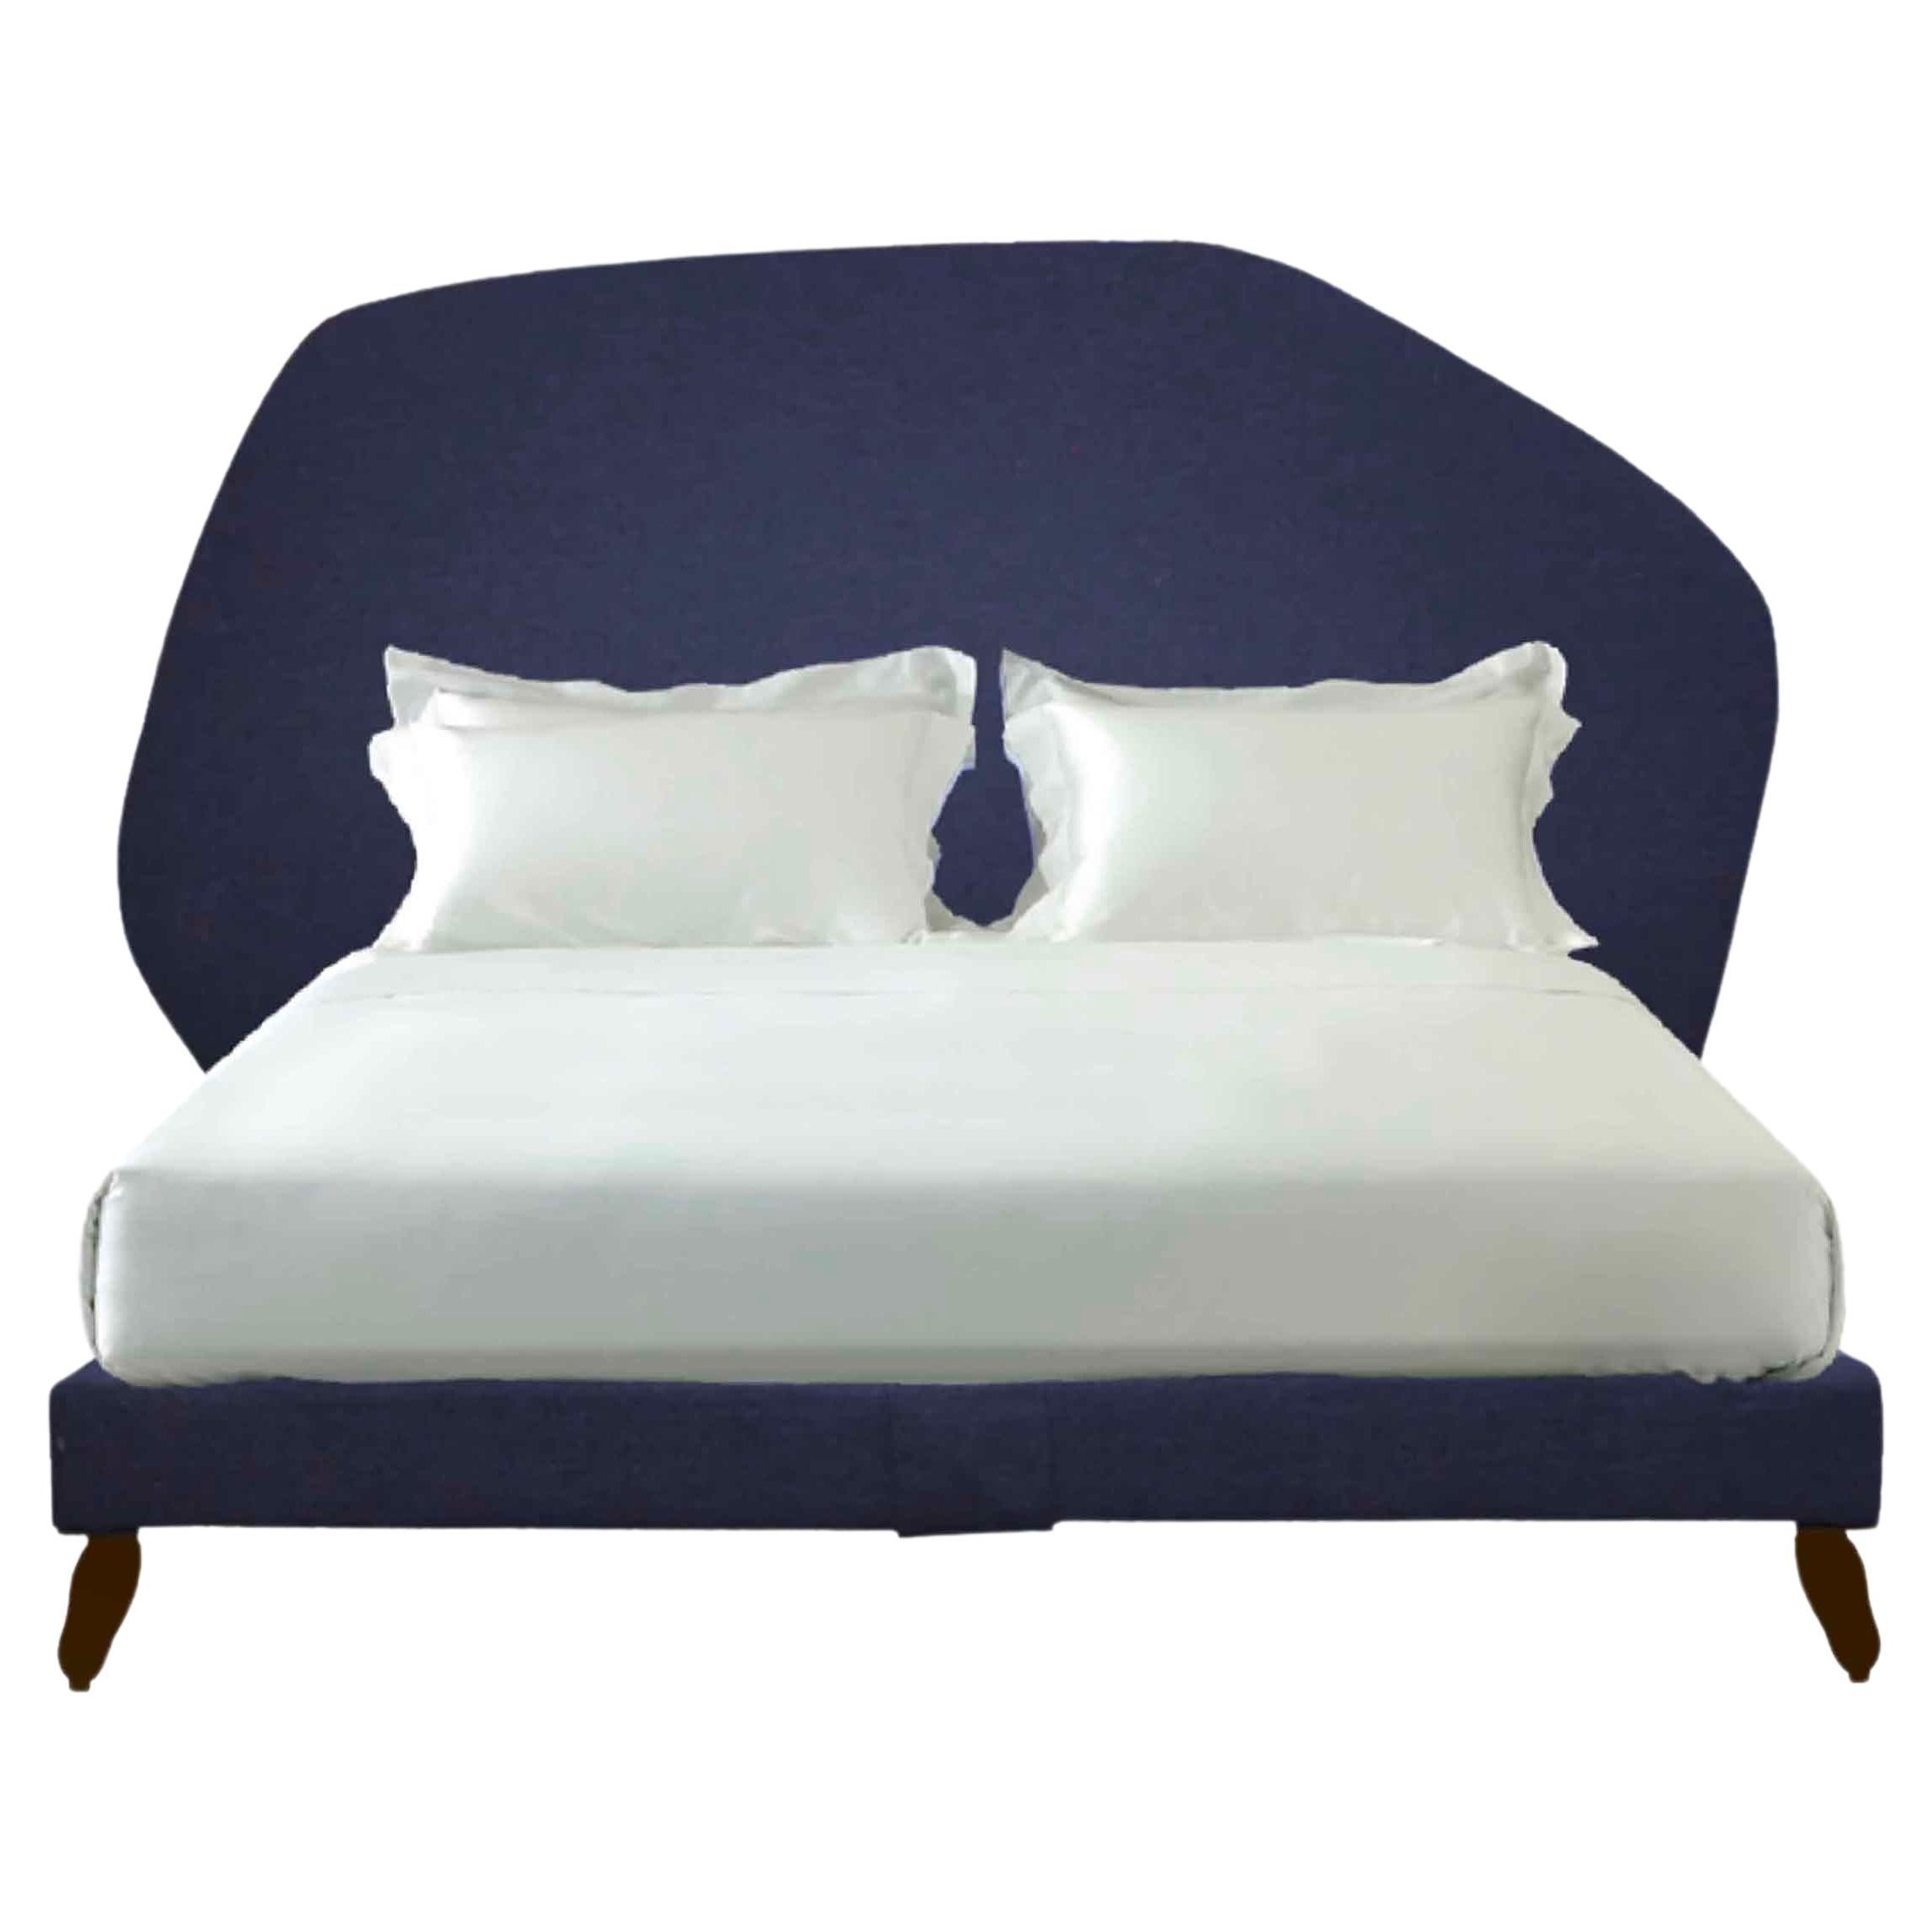 Savoir Cloud & Nº4 Bed Set, Handmade to Order, US King Size, by Tom Faulkner 